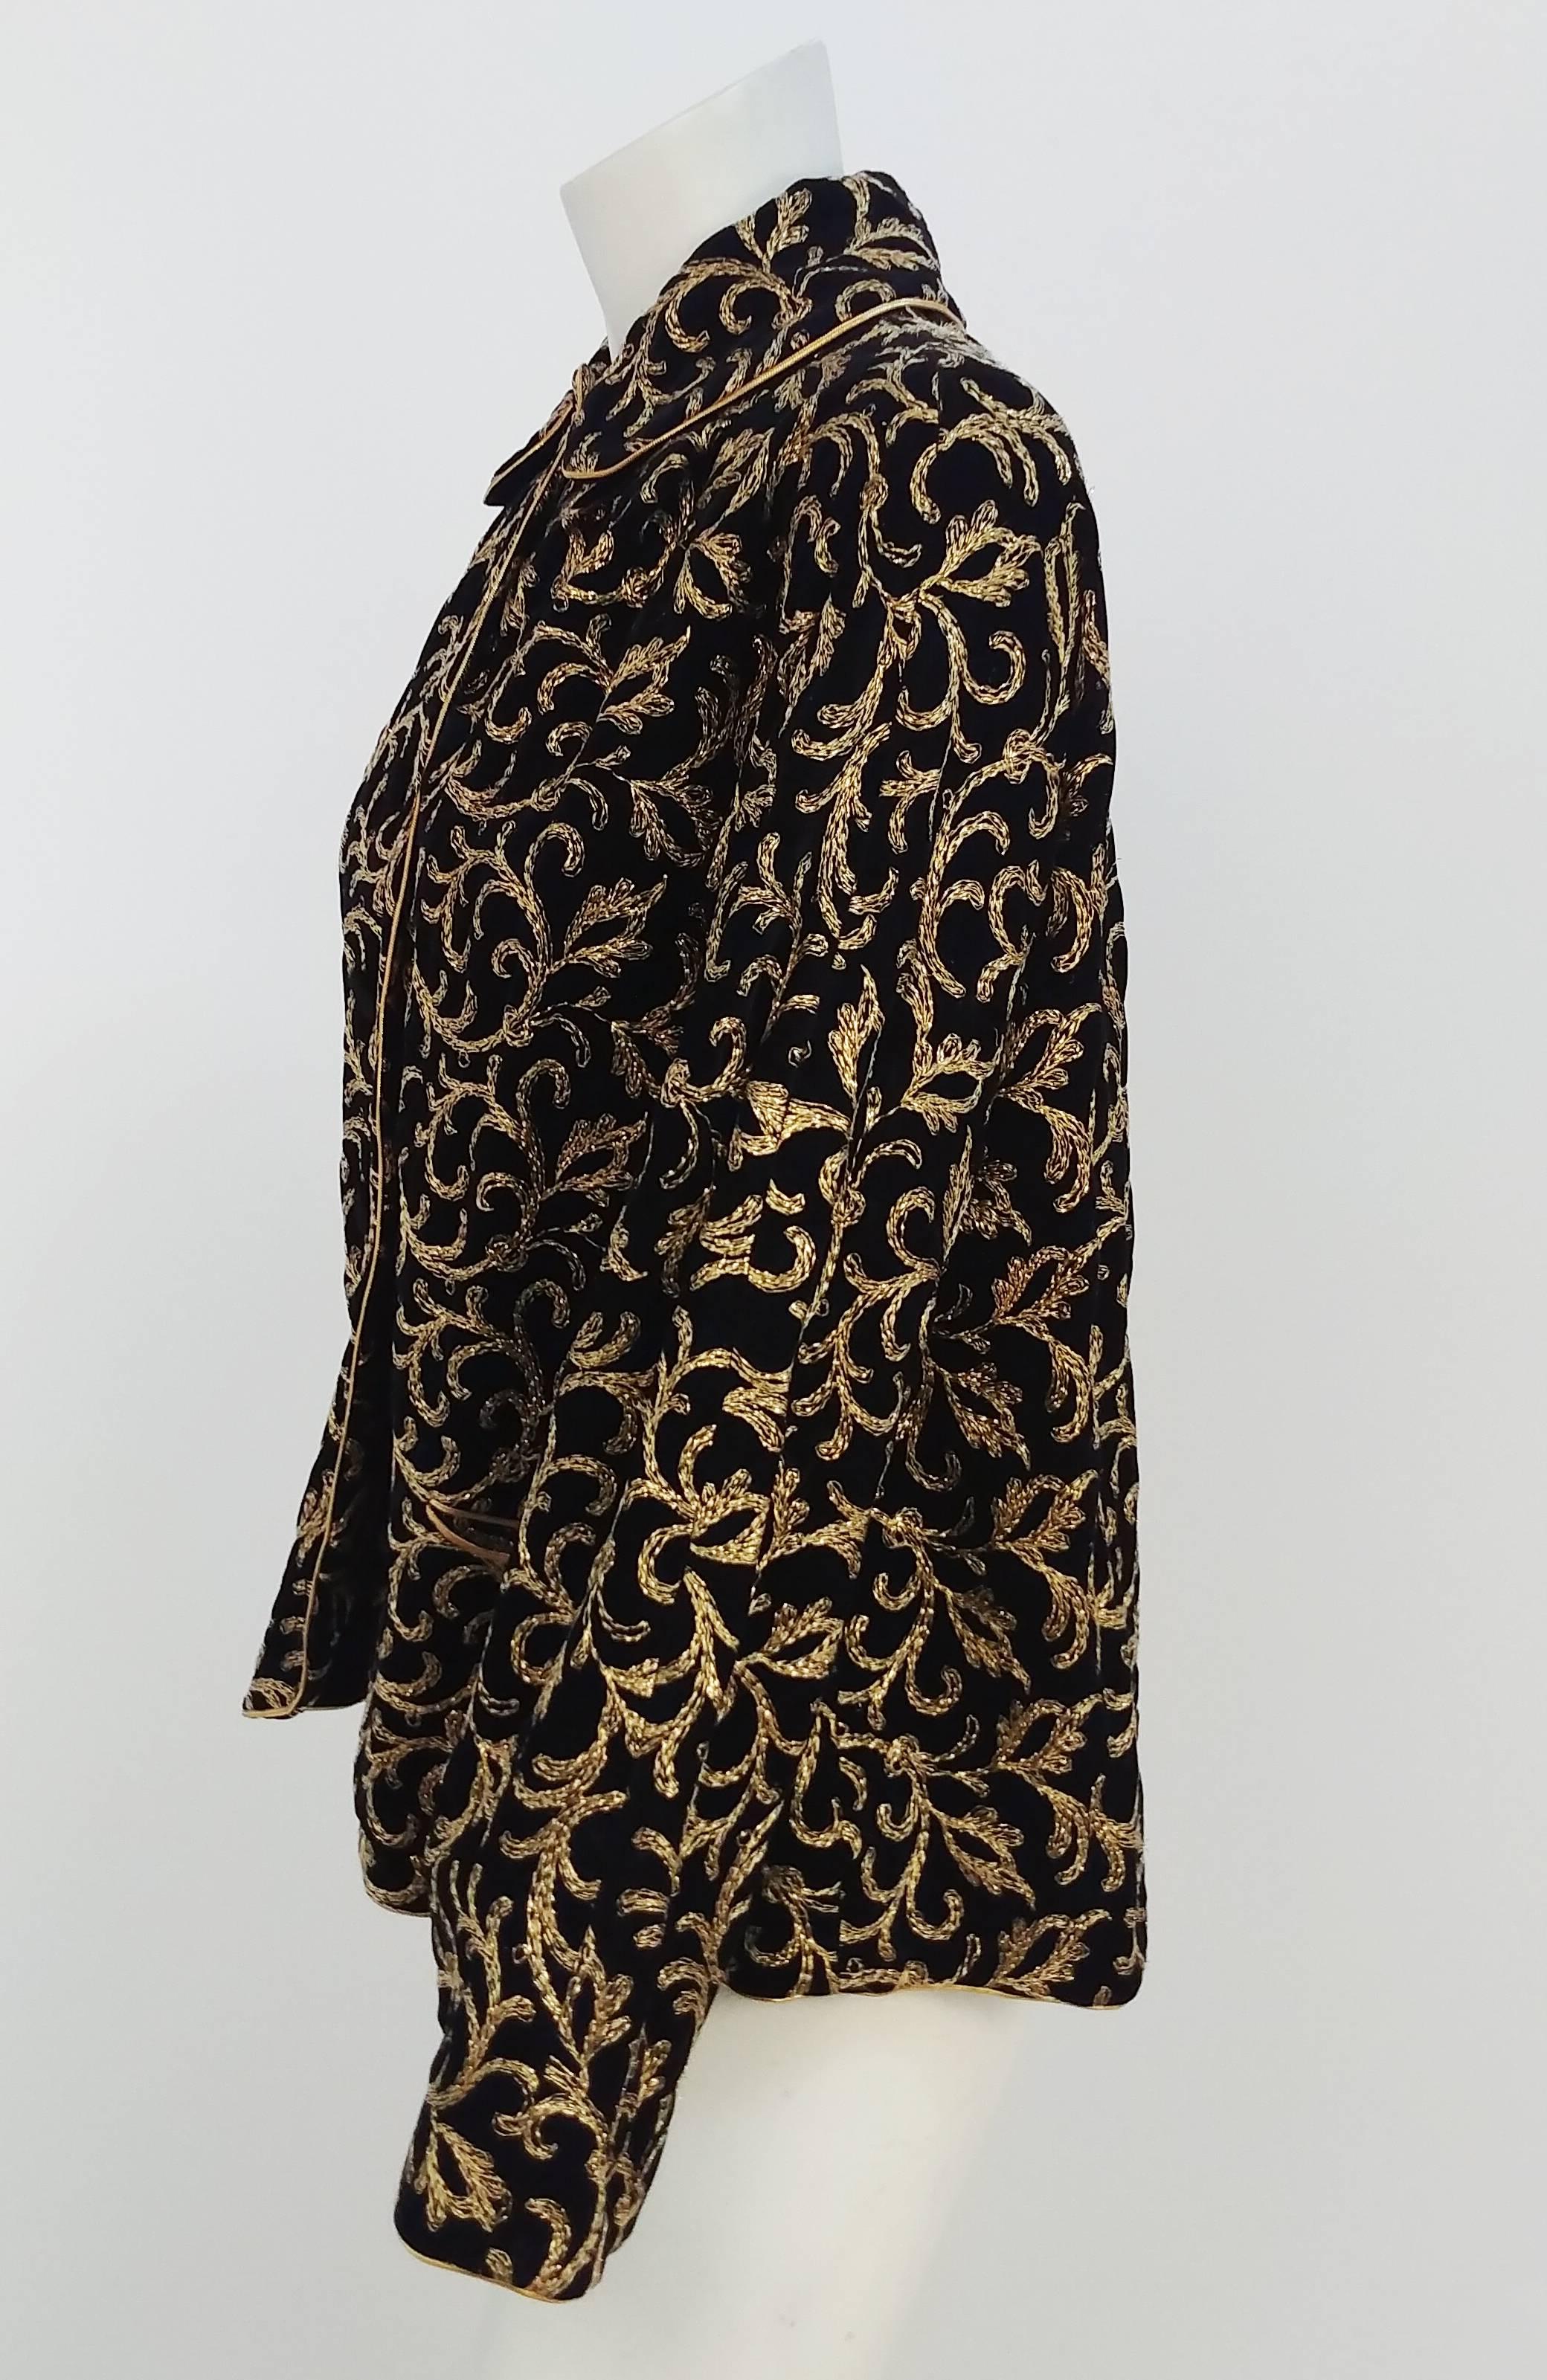 1960s Velvet Jacket w/ Metallic Embroidery. Unlined. Trimmed w/ golden metallic piping. 